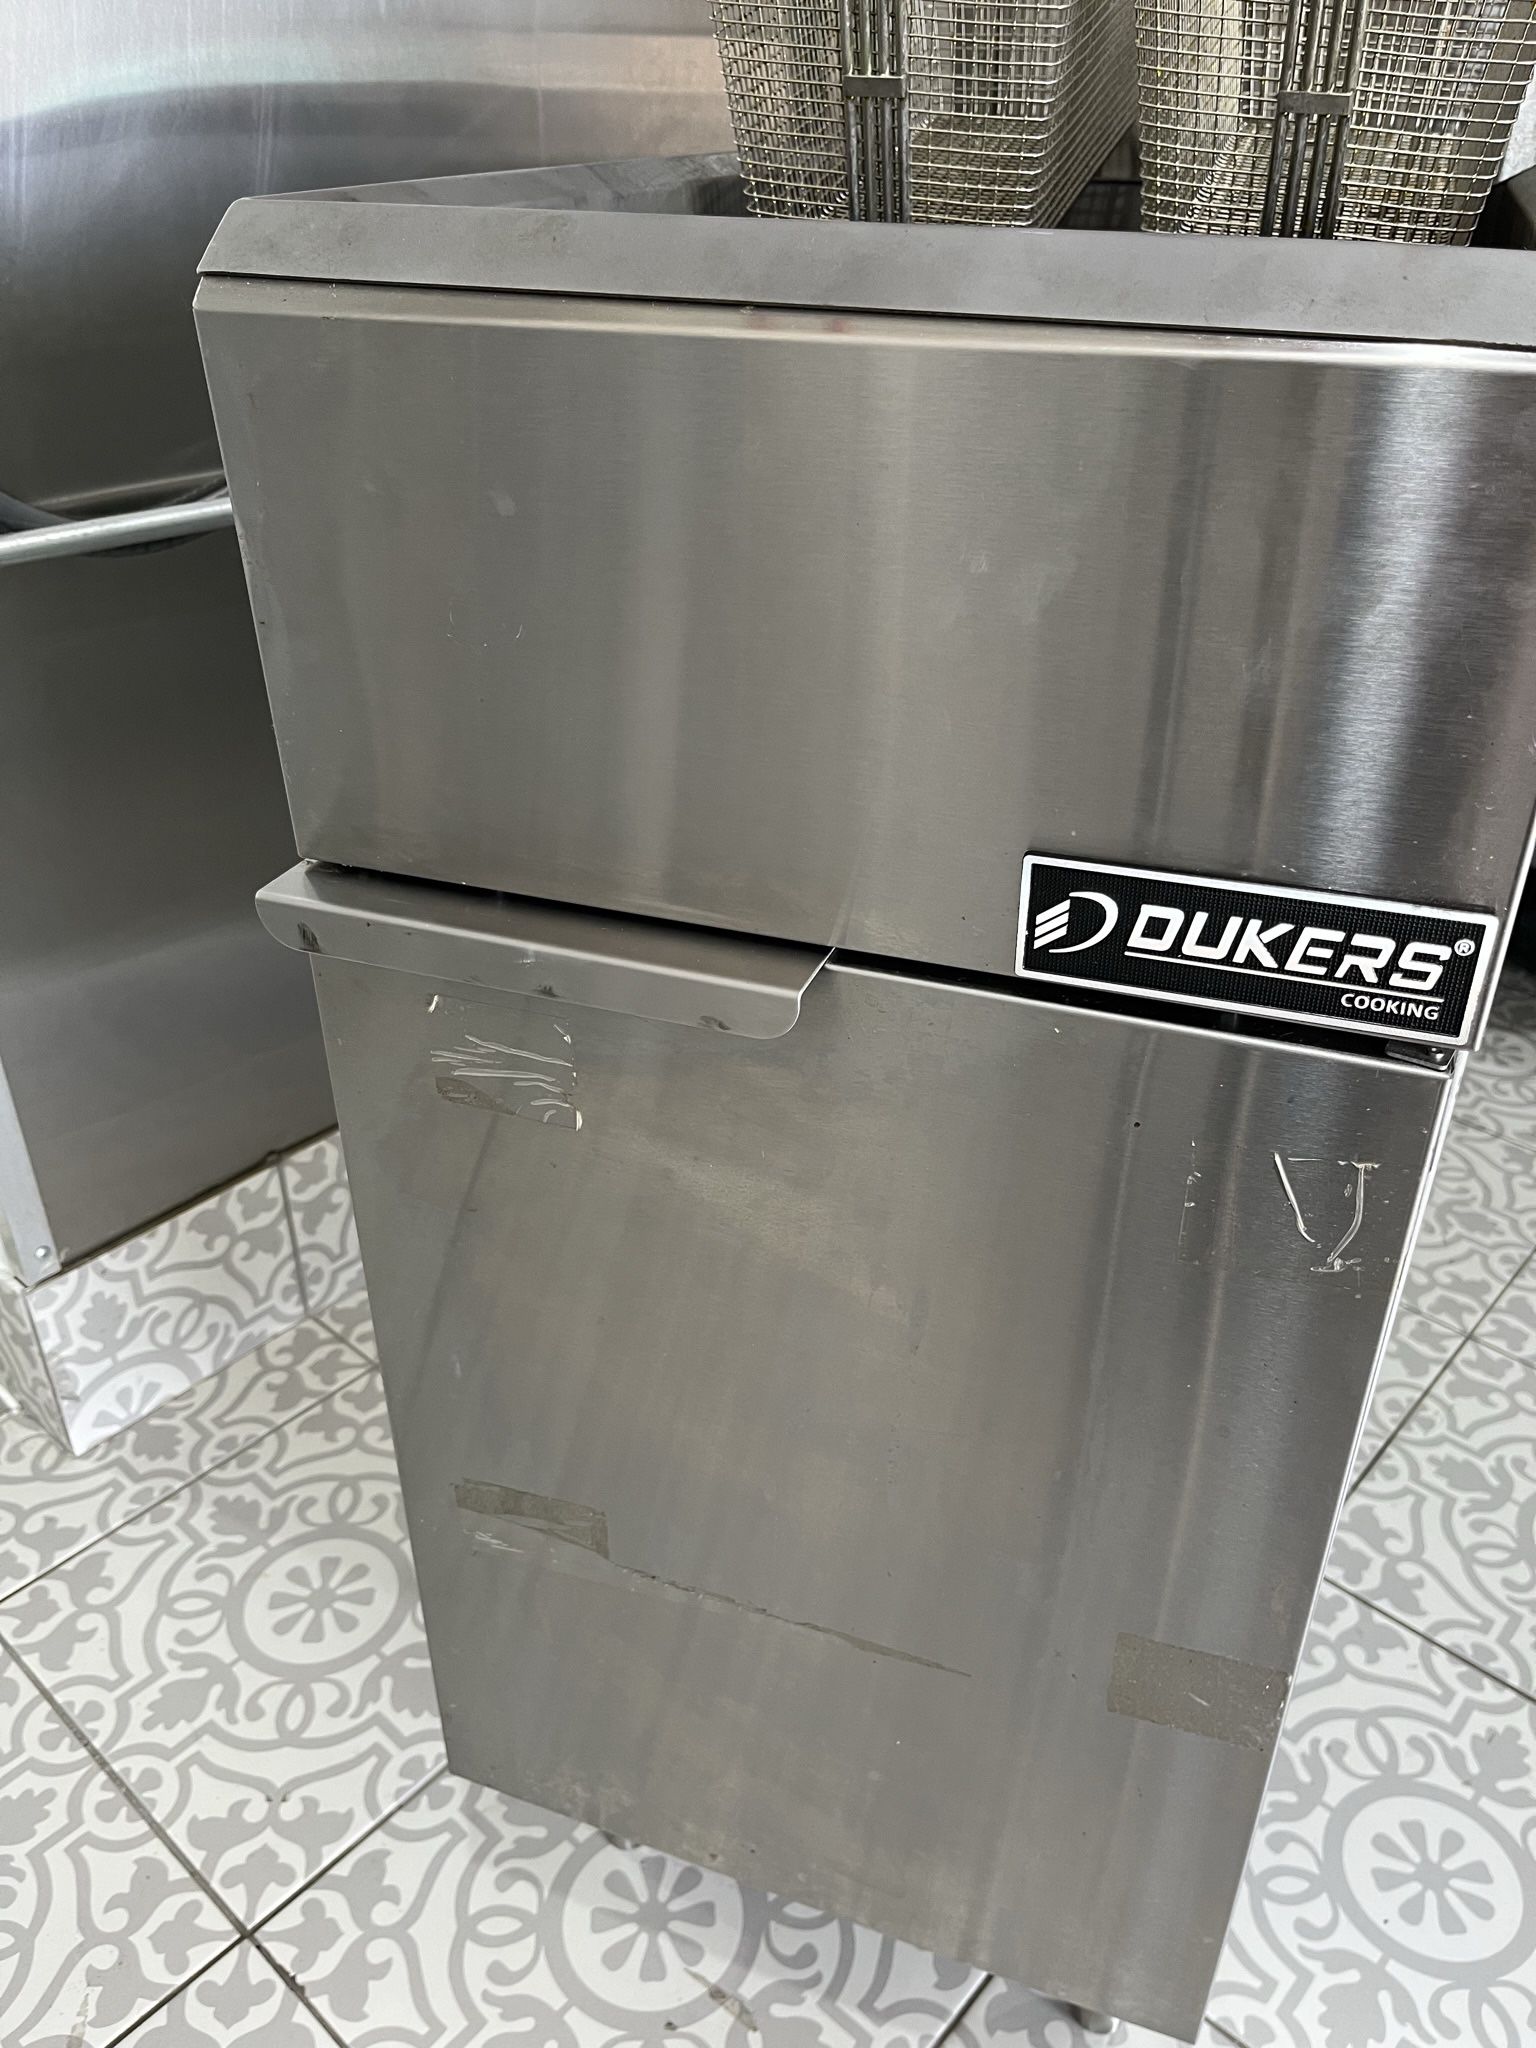 Dukers Fryer For Sale